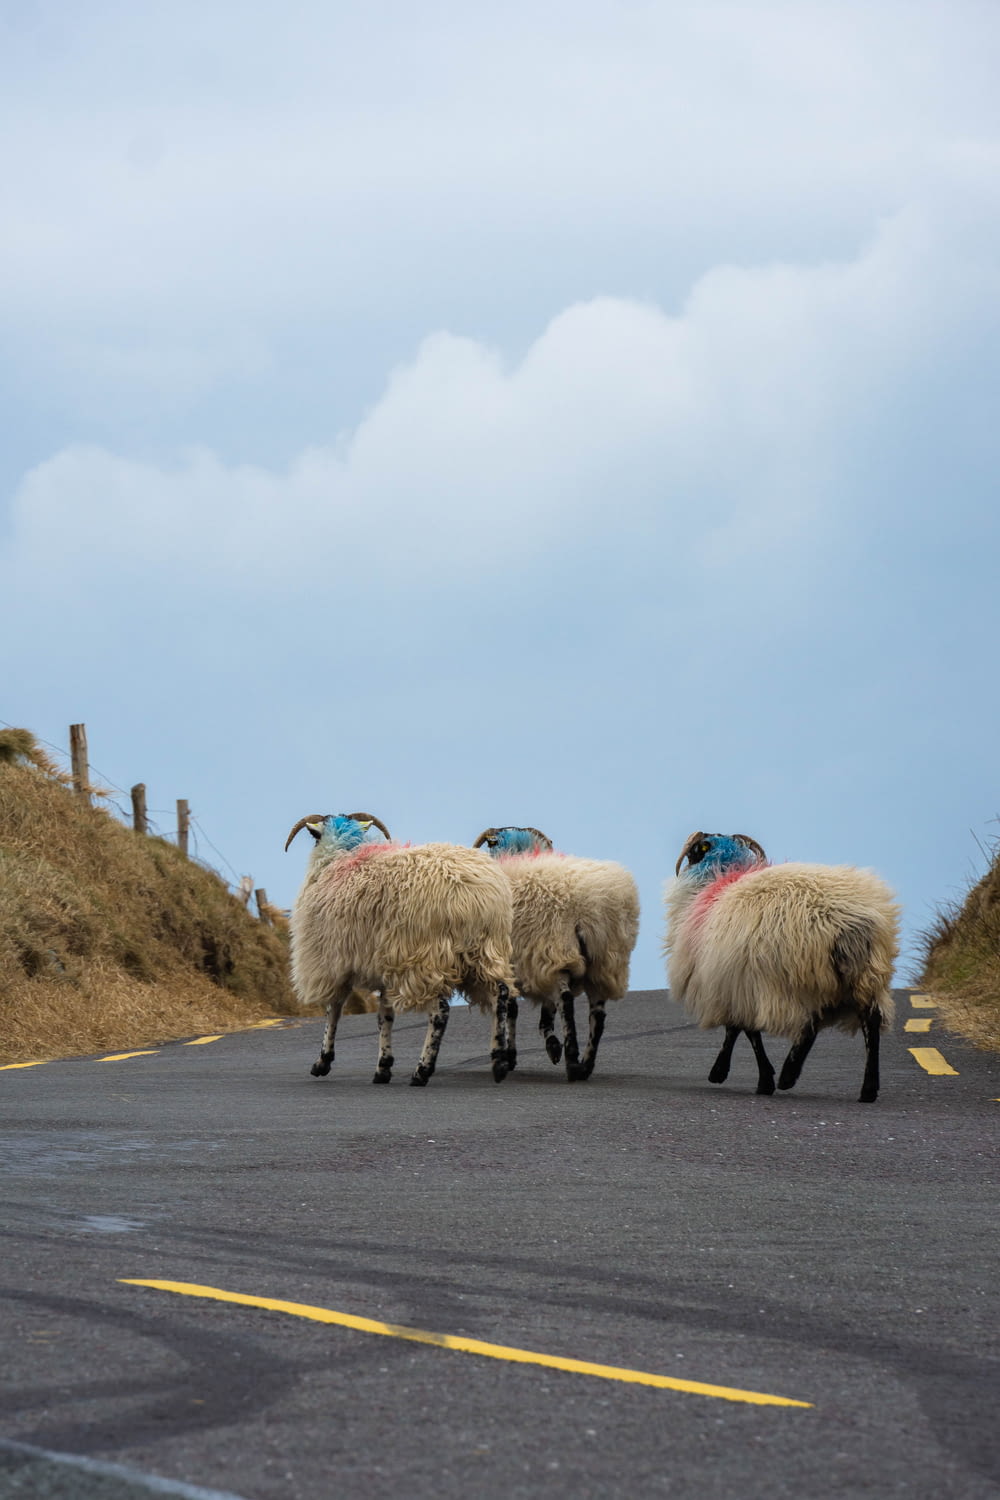 a herd of sheep walking across a road